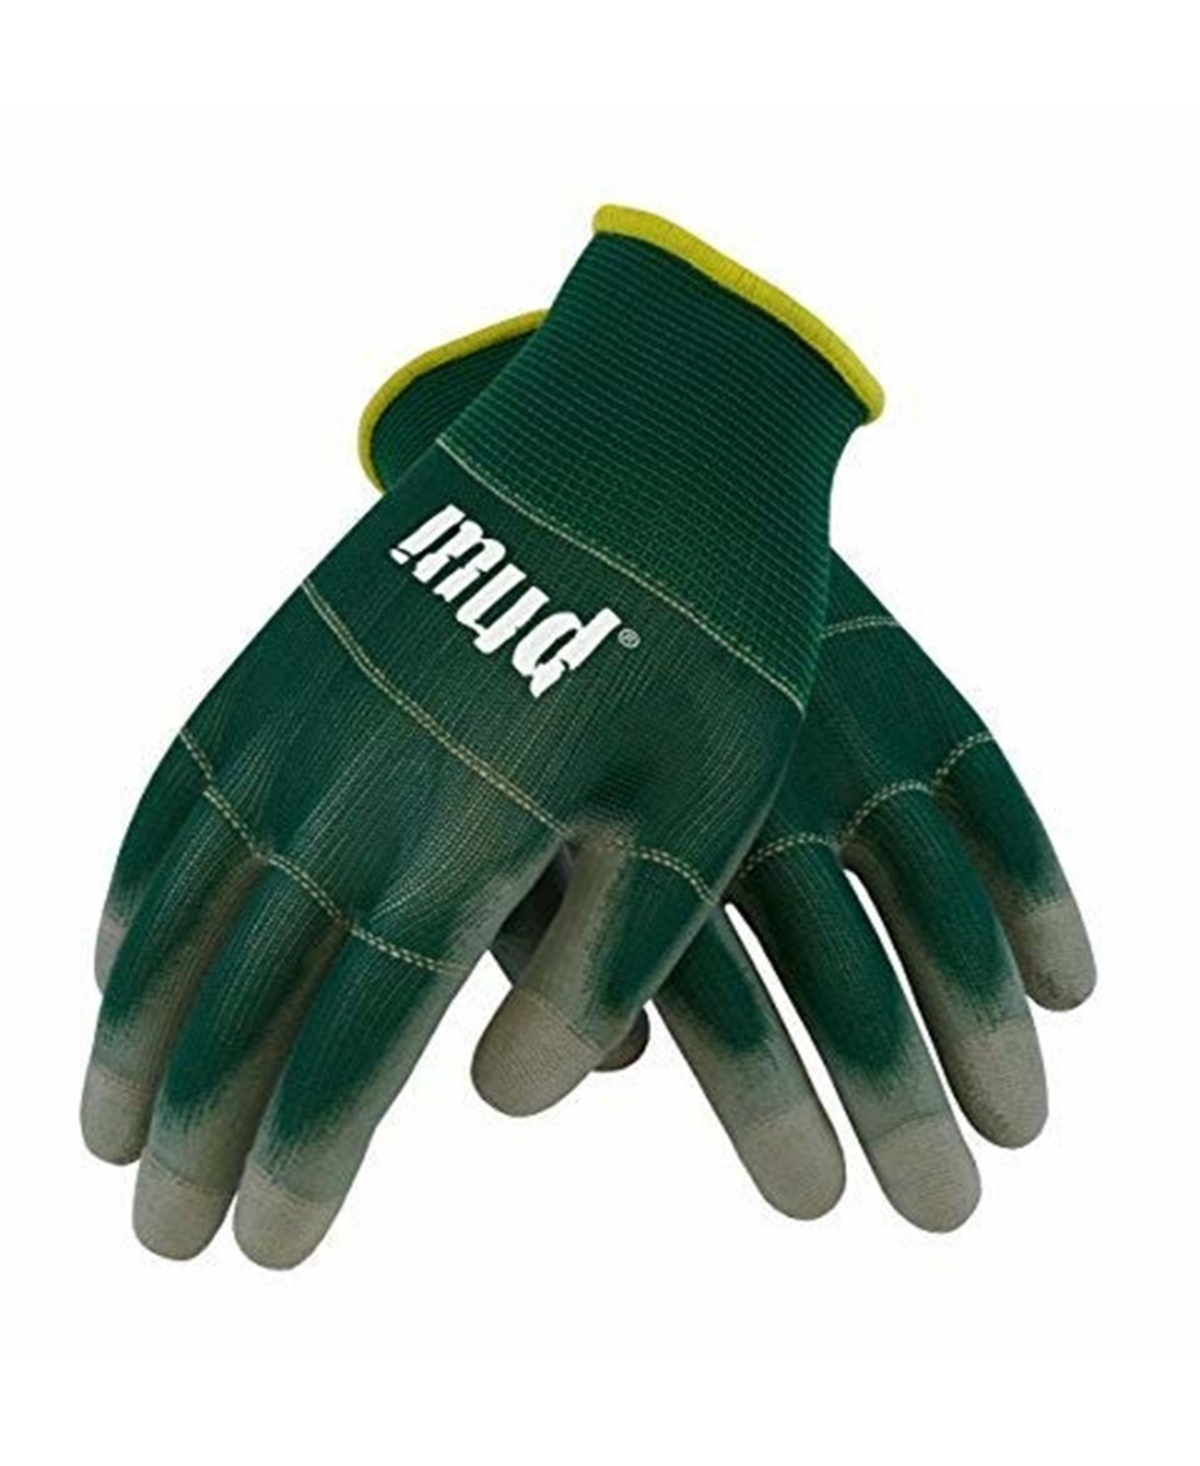 Safety Works 028C S Smart Mud, Gardening Gloves Cucumber Green, Small - Green